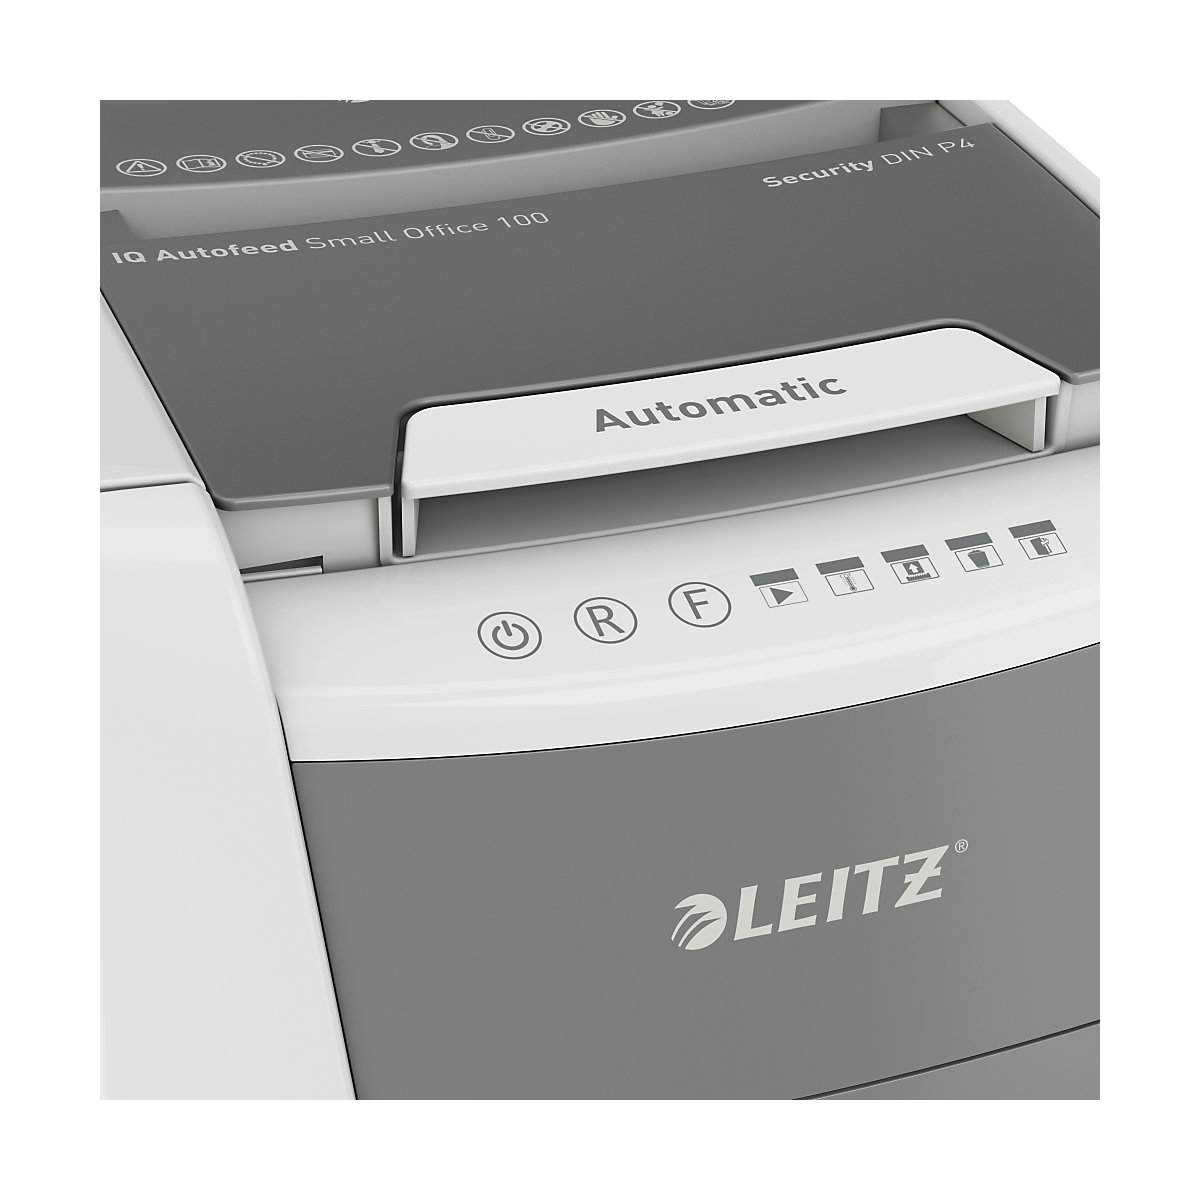 Skartovačka IQ Autofeed Small Office – Leitz (Obrázek výrobku 14)-13